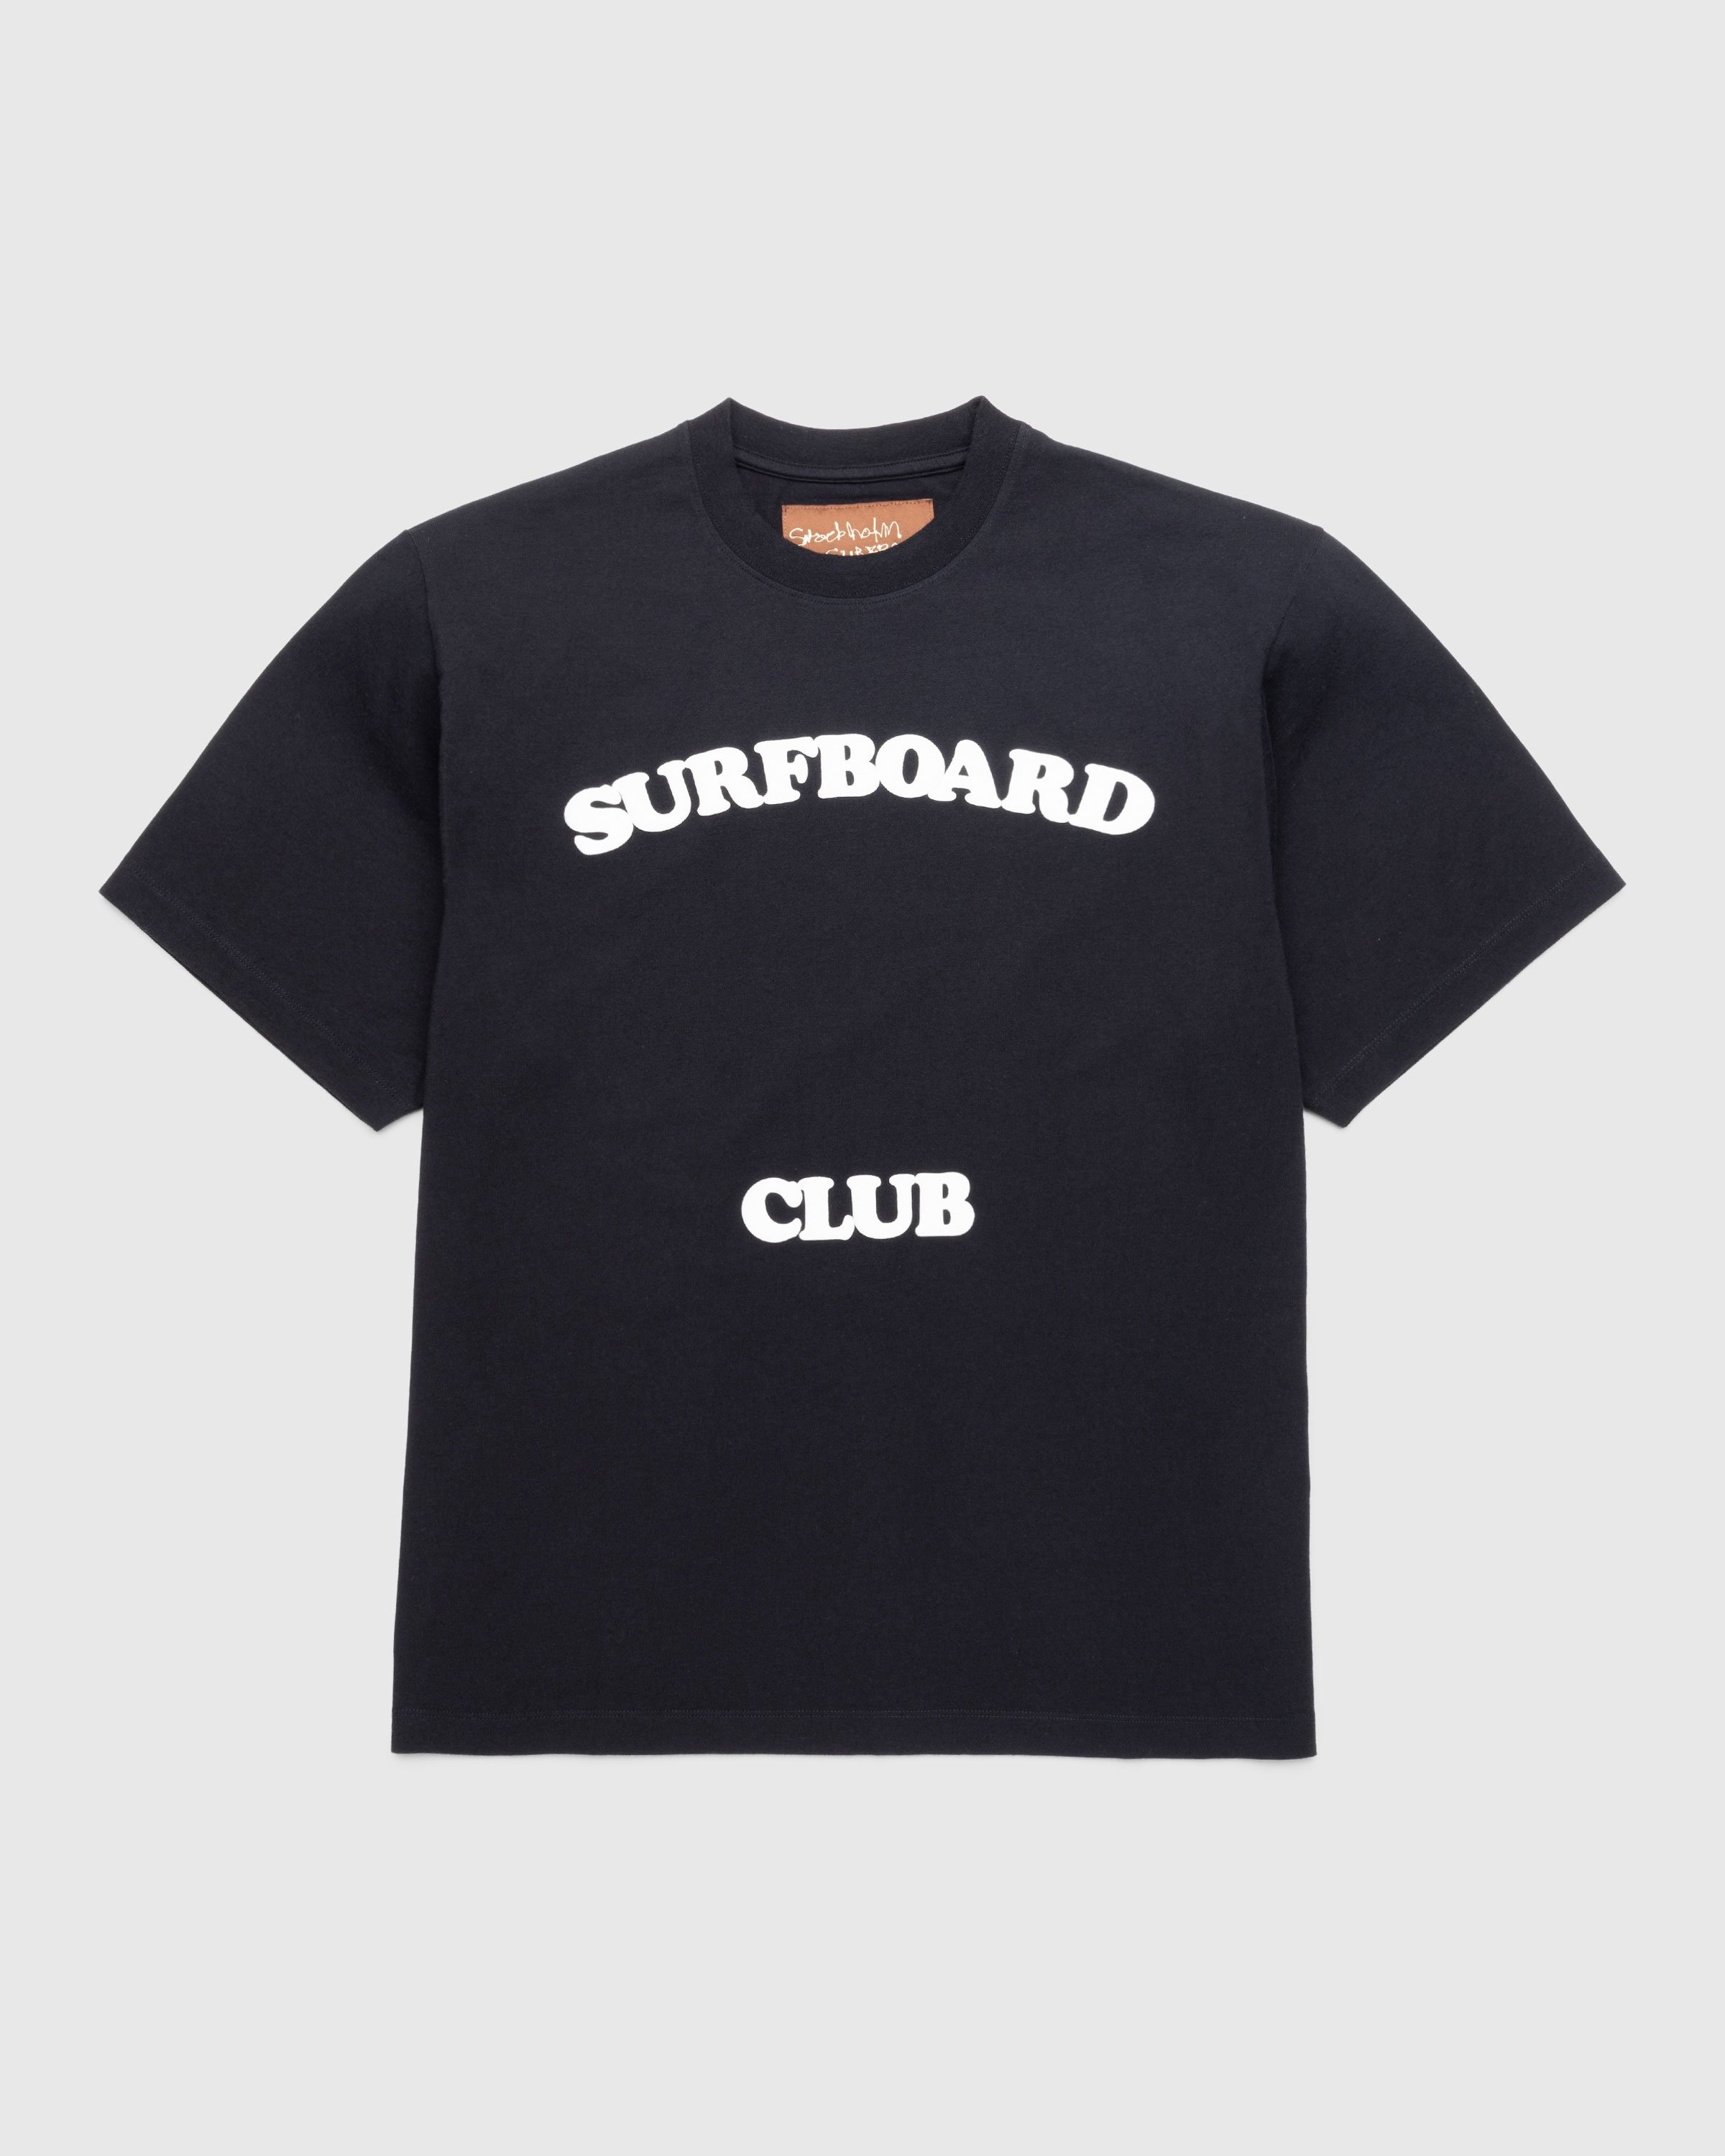 Stockholm Surfboard Club – Leaf Club T-Shirt Black - T-shirts - Black - Image 1